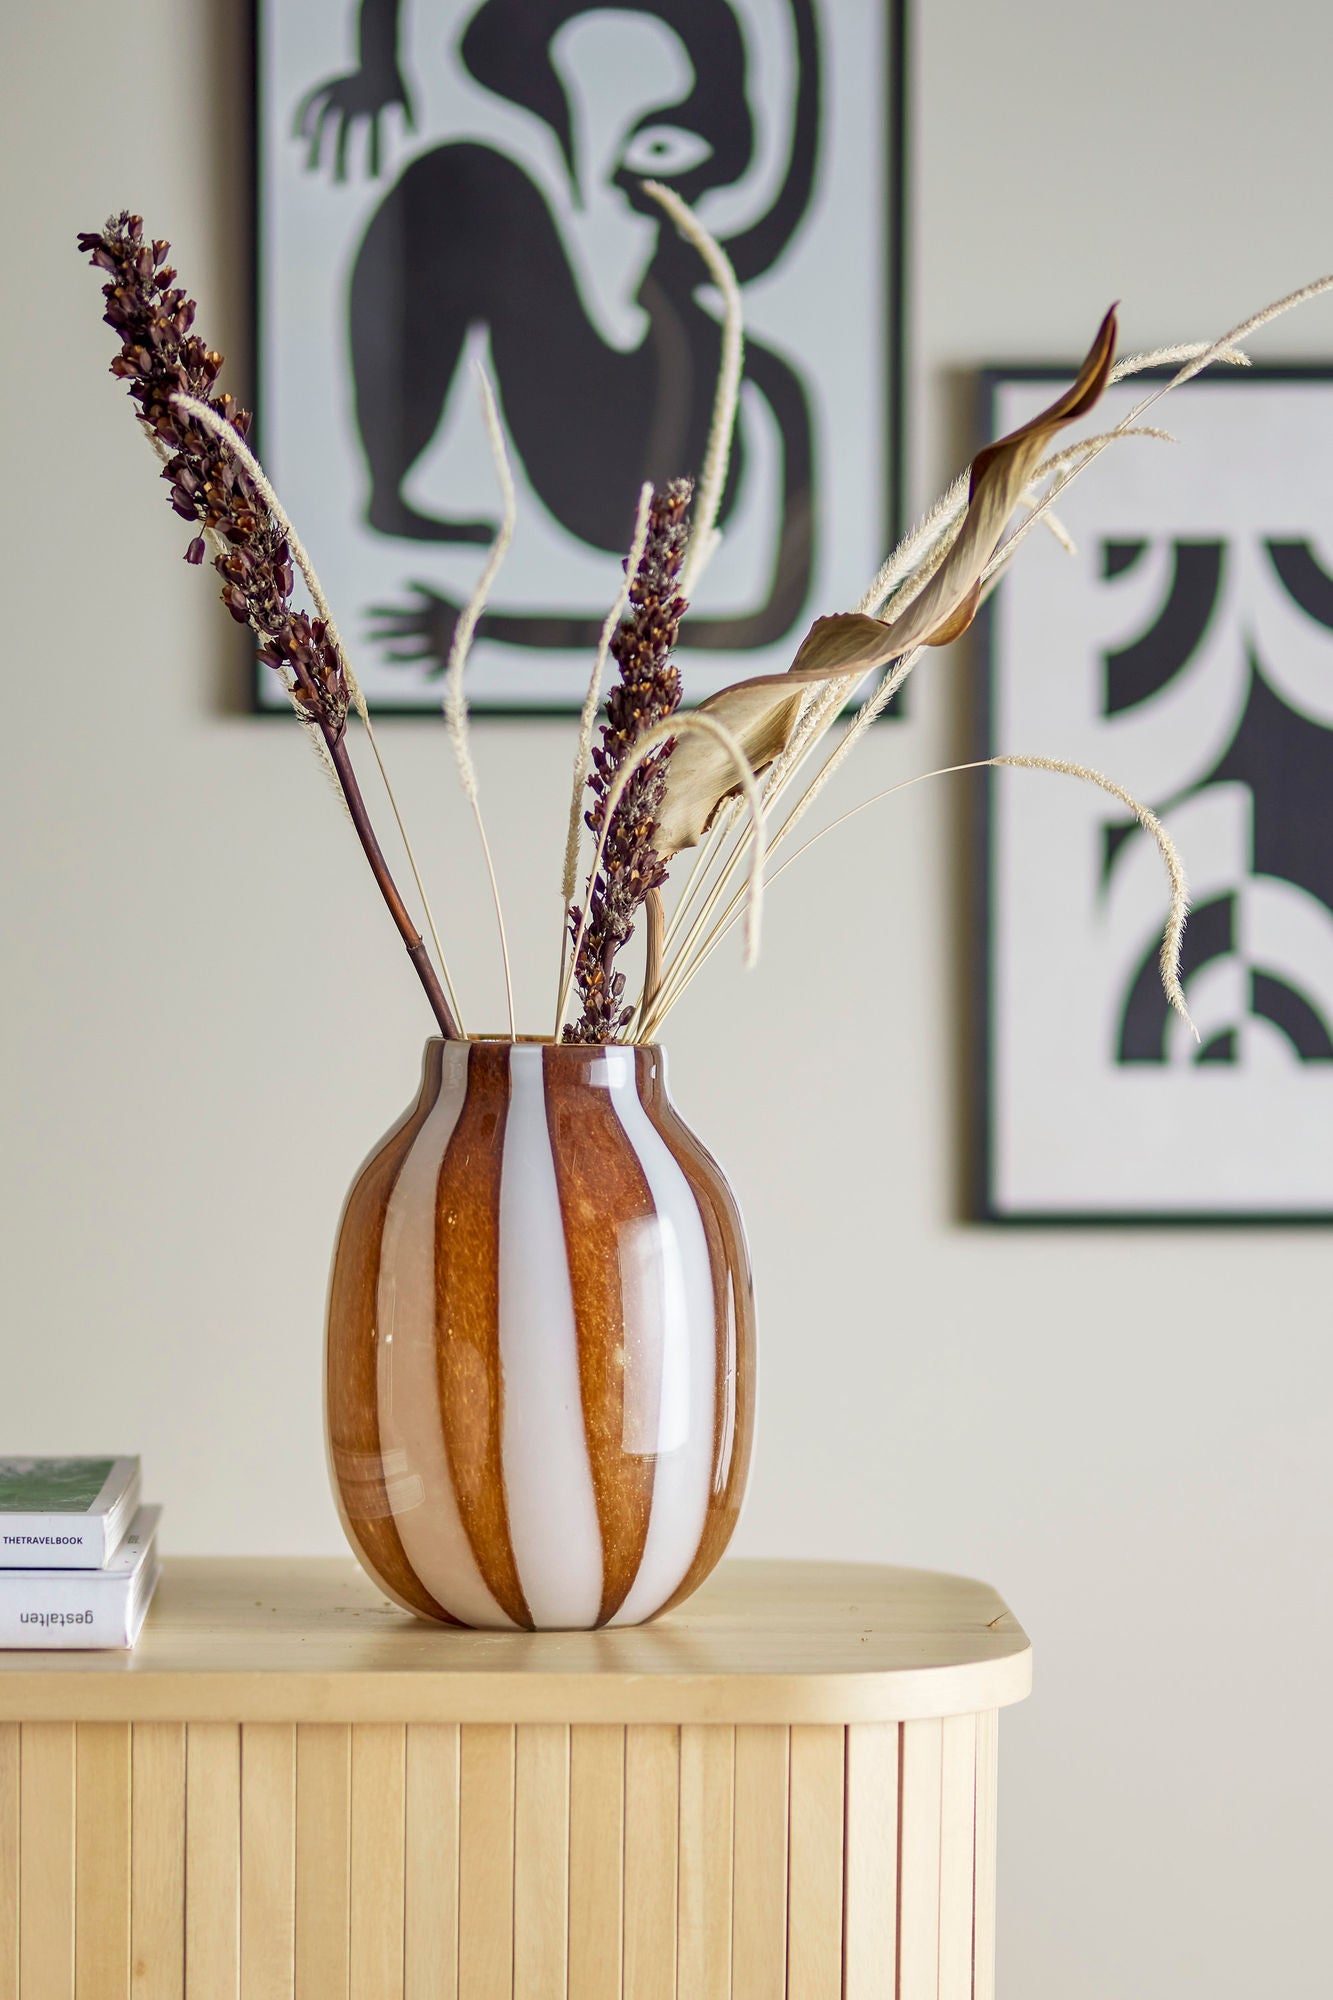 Bloomingville Mayah Vase, Brown, Glass